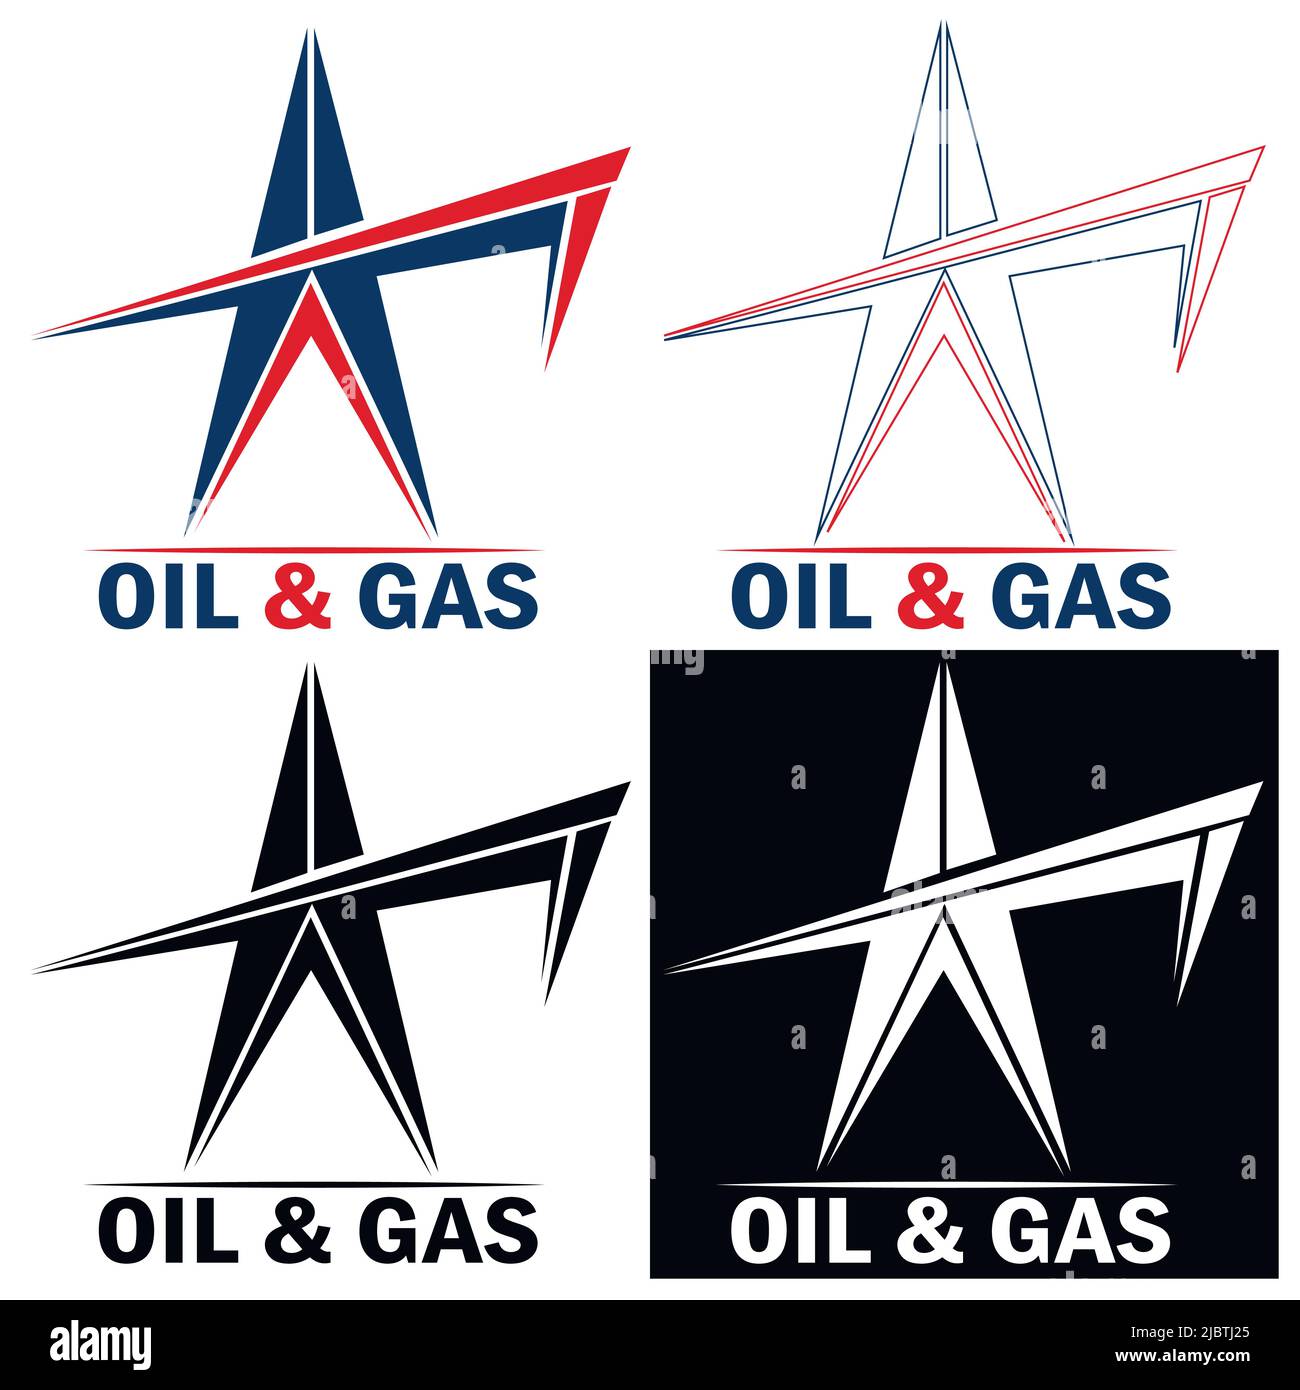 Emblem petrolio carro per l'industria di produzione di petrolio e gas. Design vettoriale a linea piatta. Illustrazione Vettoriale